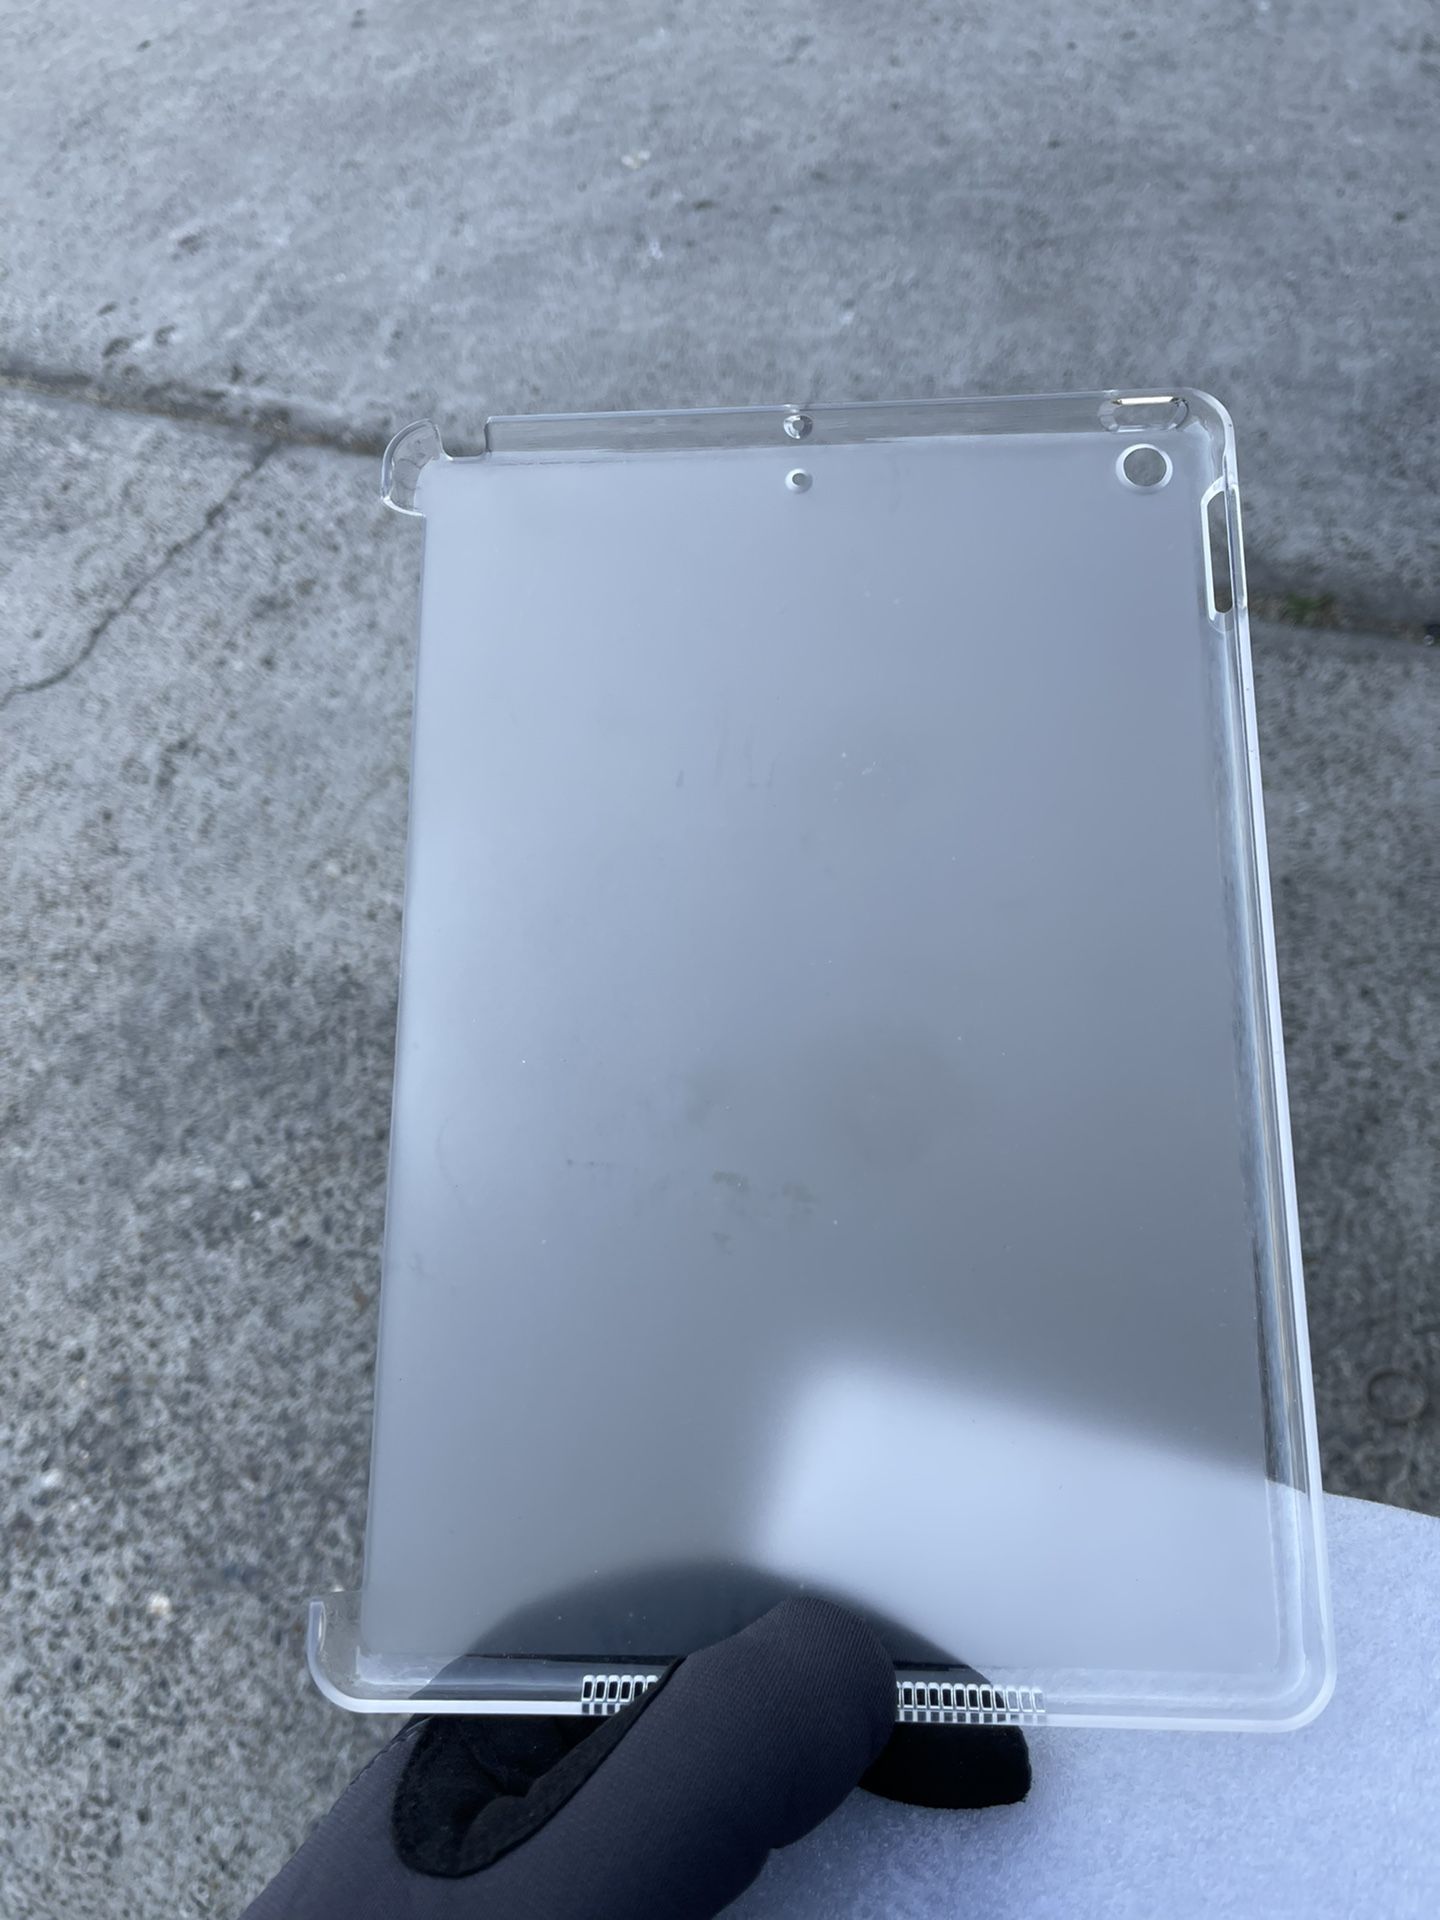 Apple iPad Case Sale in Victorville, California 92392 - Senor